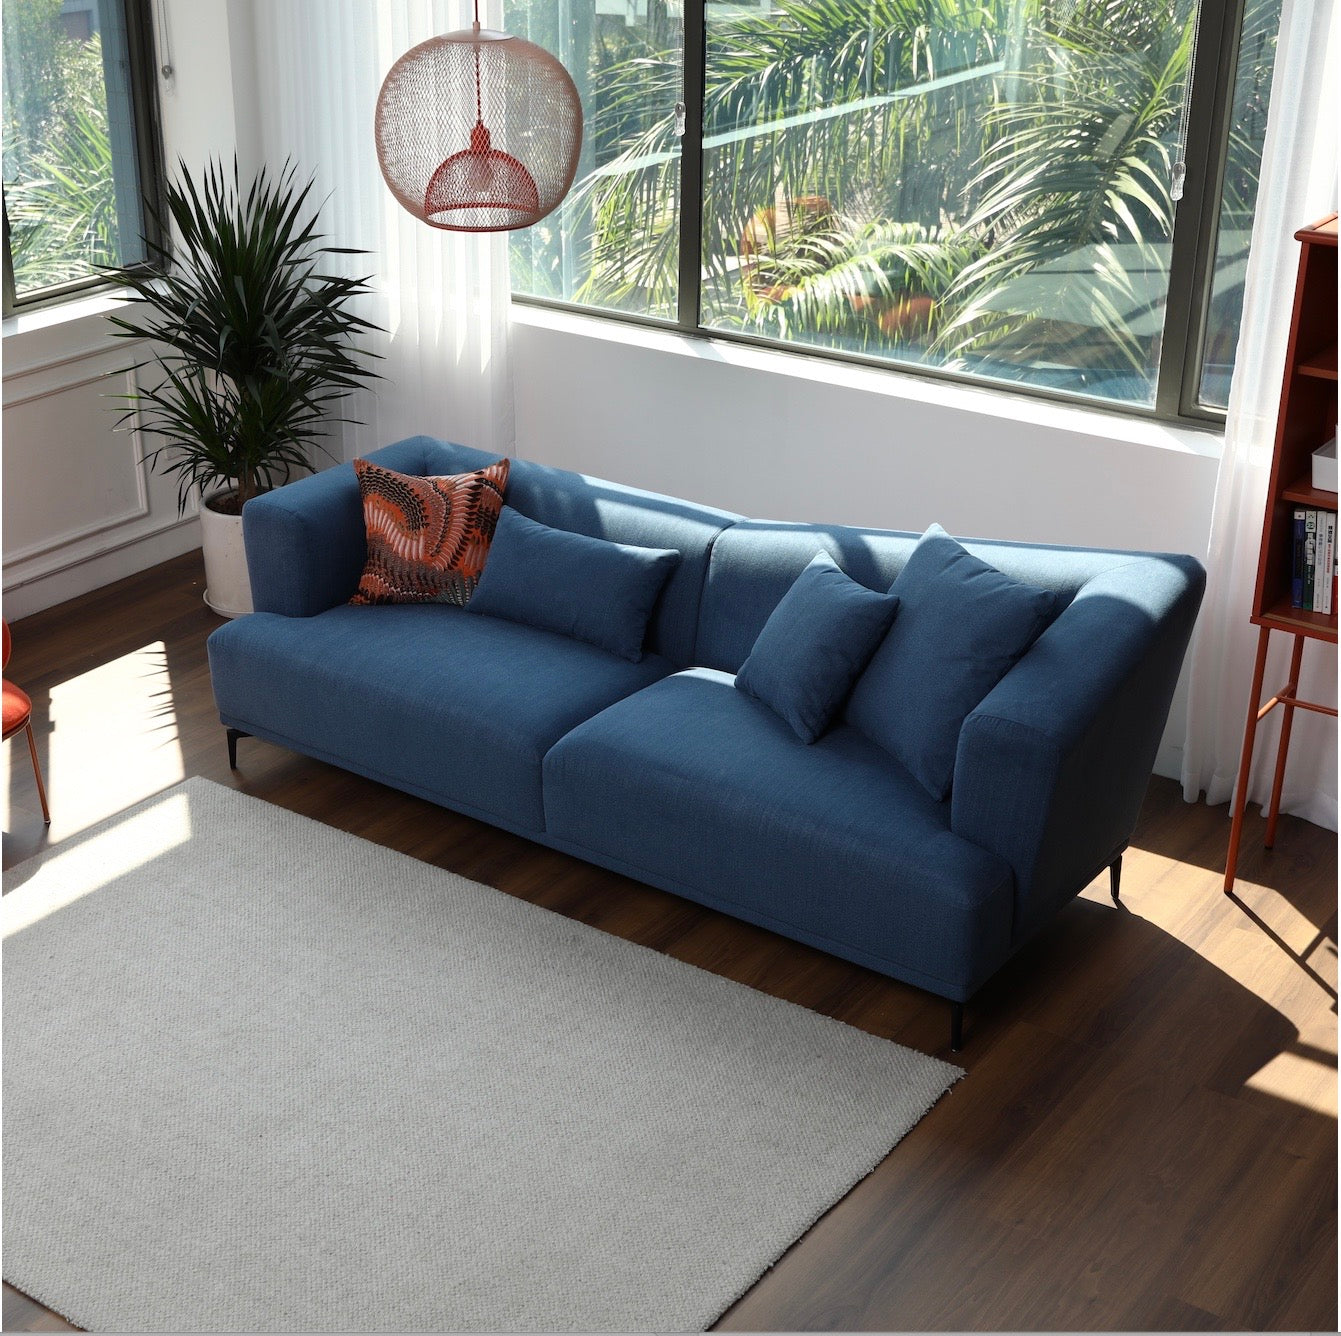 Miami sofa 2 Seater - Blue